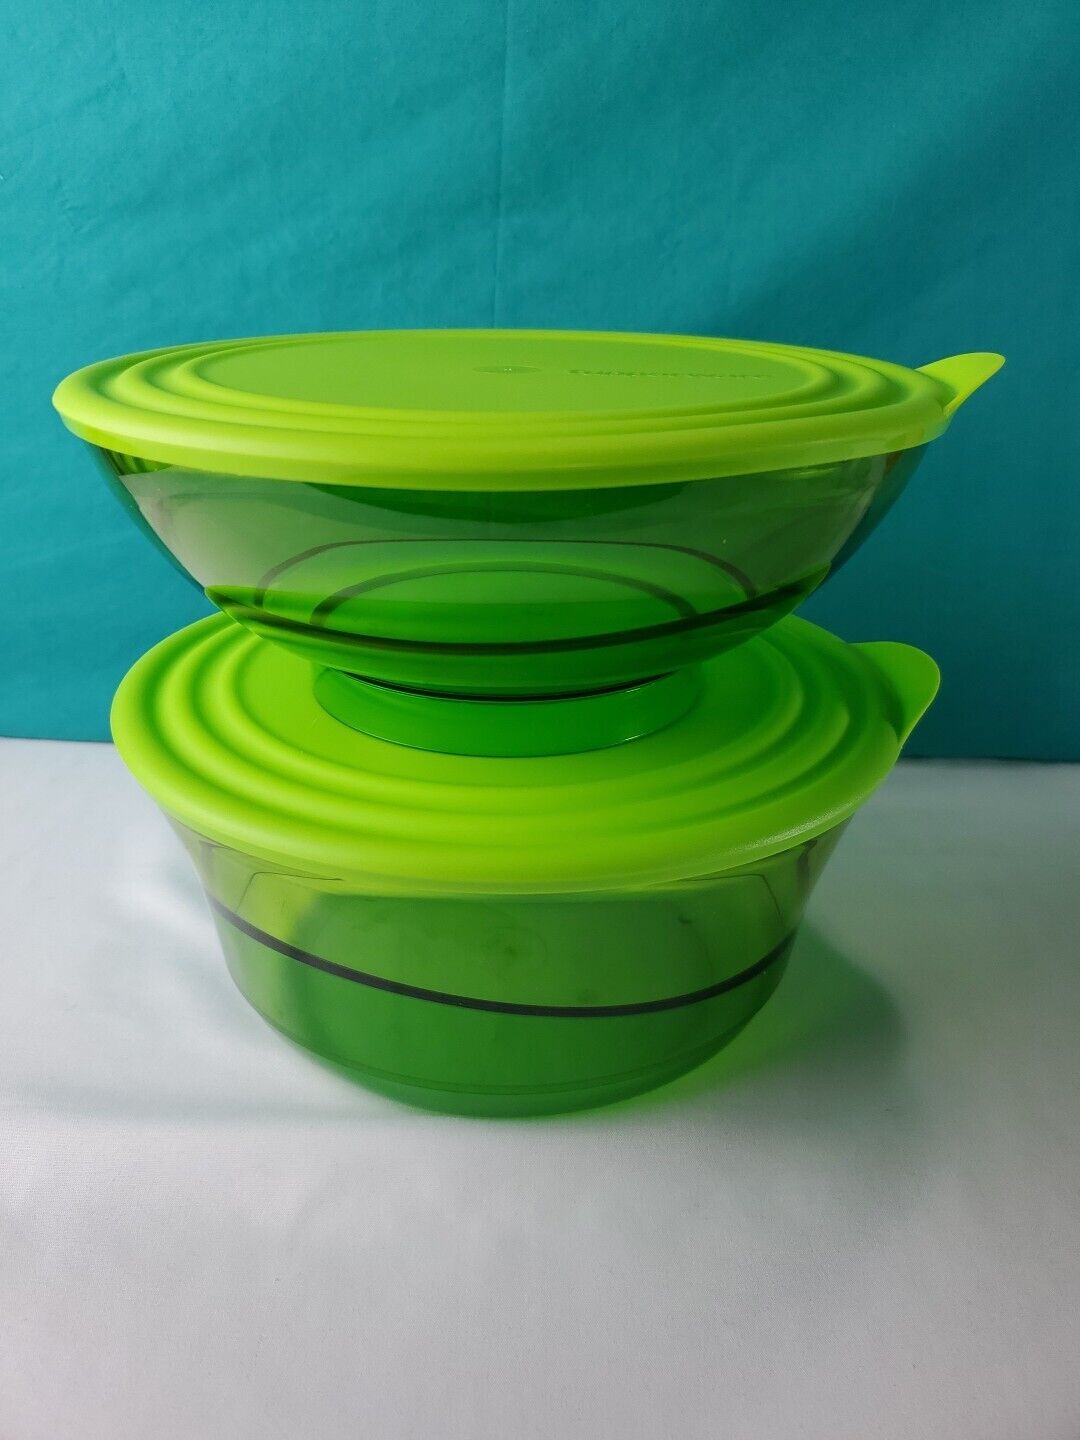 Tupperware Sheerly Elegant Deluxe Acrylic Eleganzia Serving Bowl Set of 2 Green